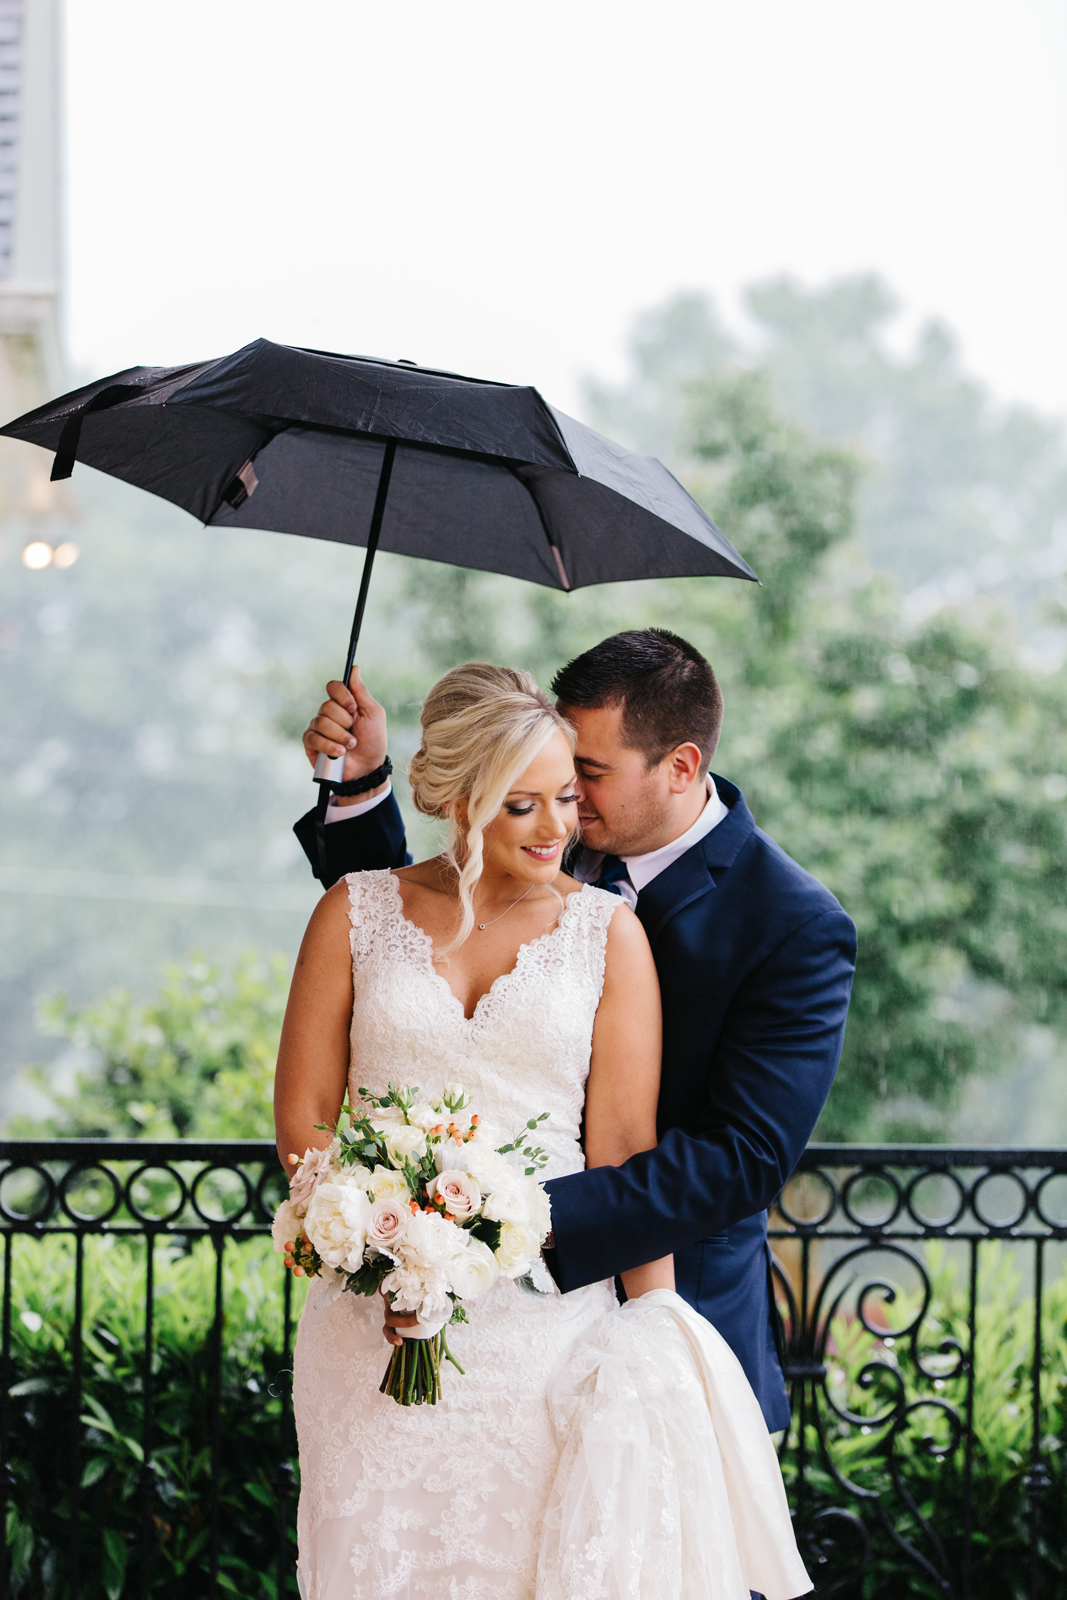 Nashville TN Wedding Photographer Laura K. Allen | 2017 Best of Weddings, Engagements, and Portraits